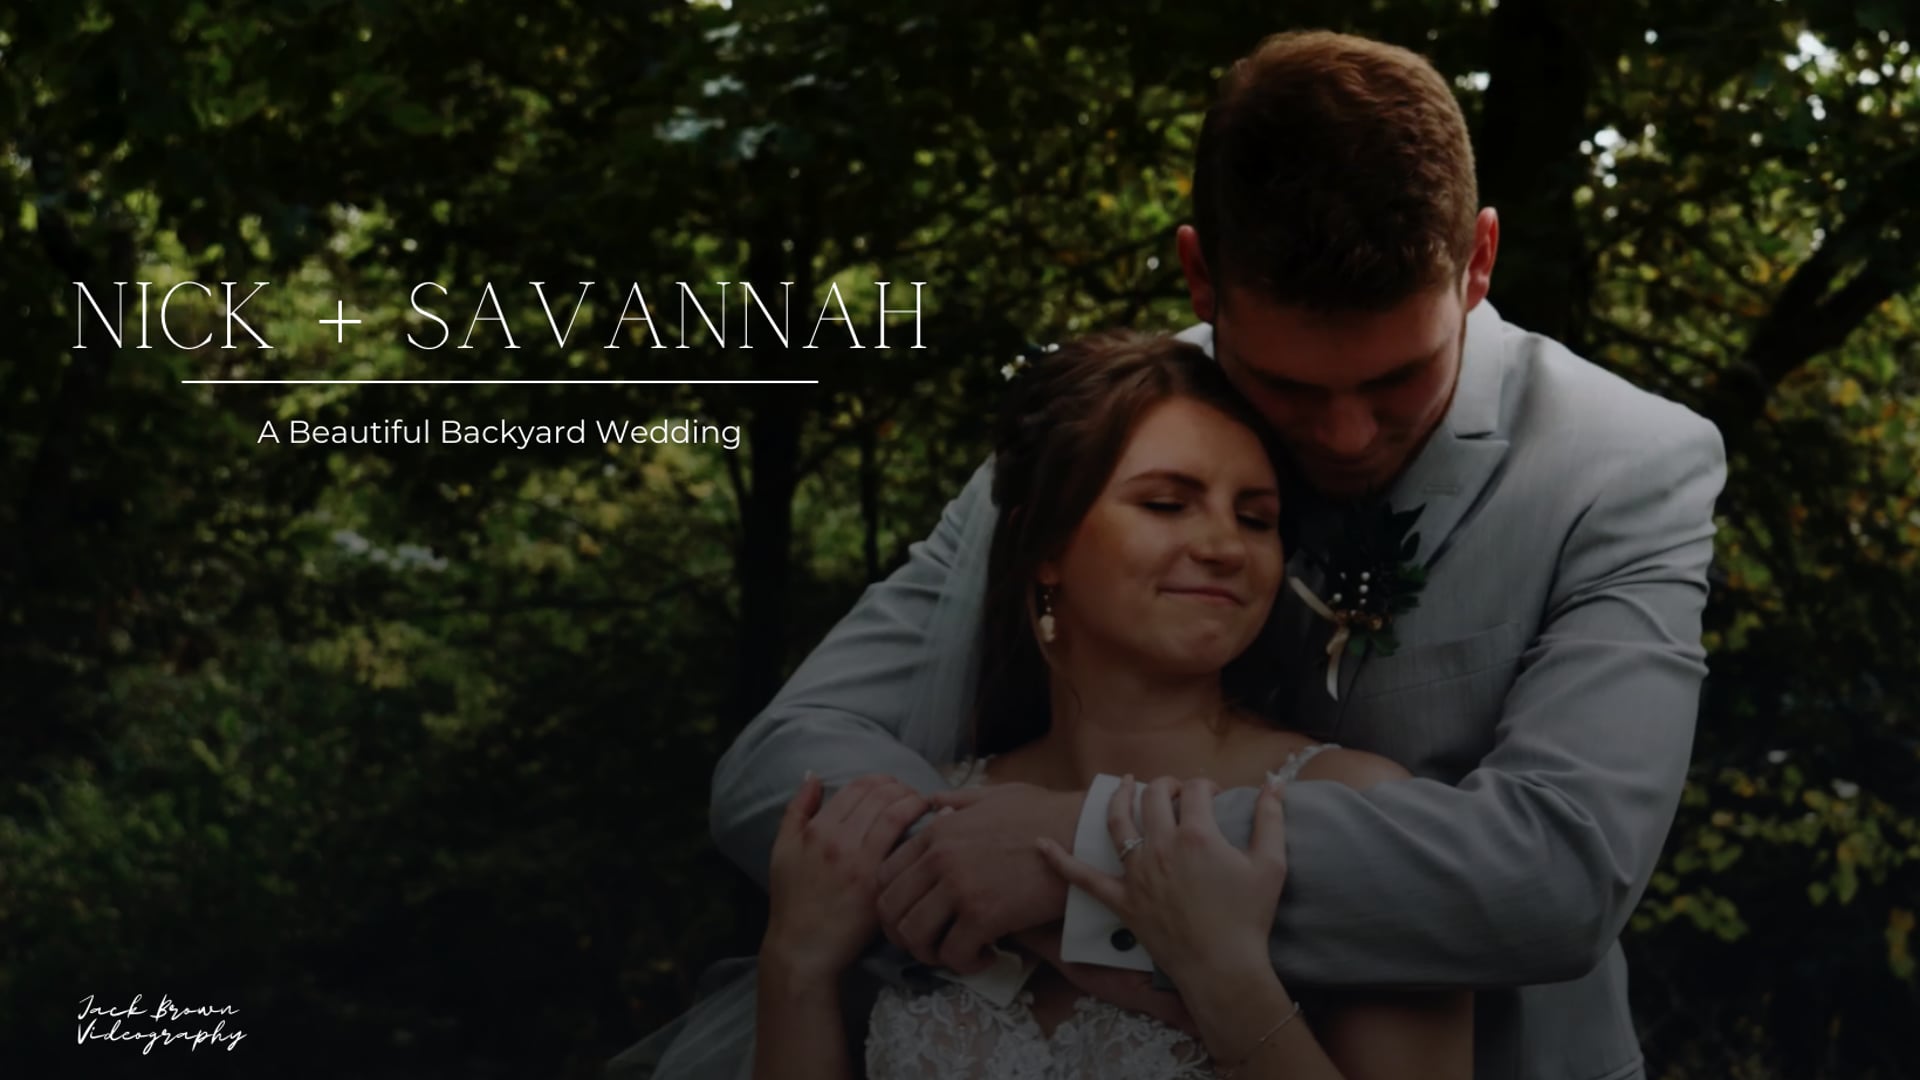 Nick and Savannah - A Beautiful Backyard Wedding in Louisville, Kentucky!